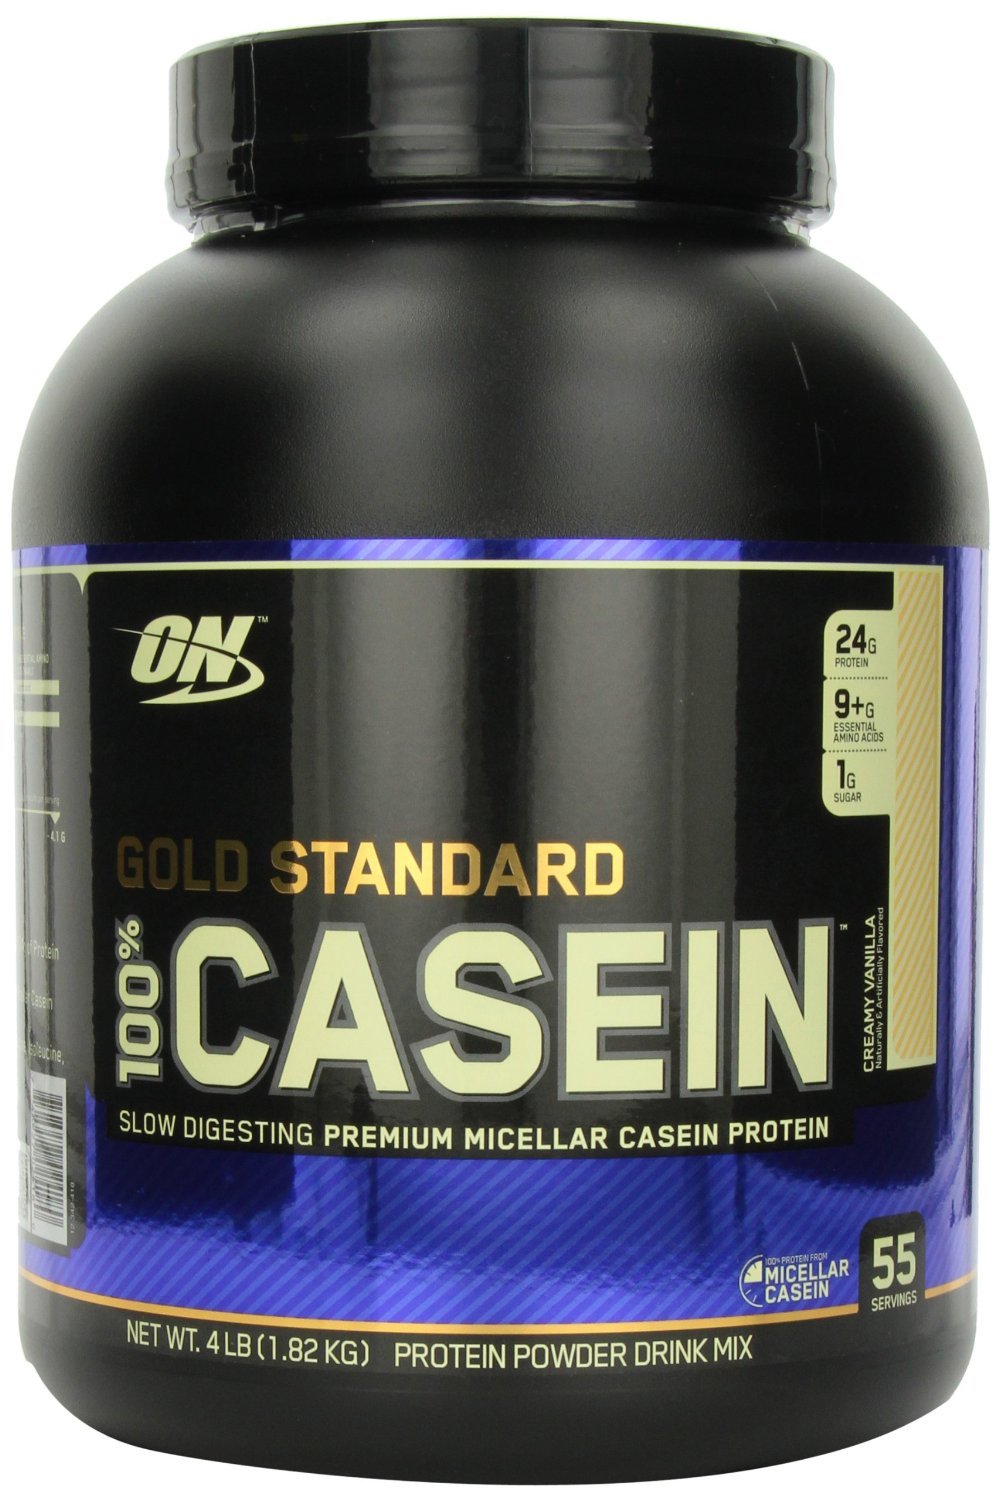 Gold Standart 100% Casein, 1800 г, Optimum Nutrition. Казеин. Снижение веса 